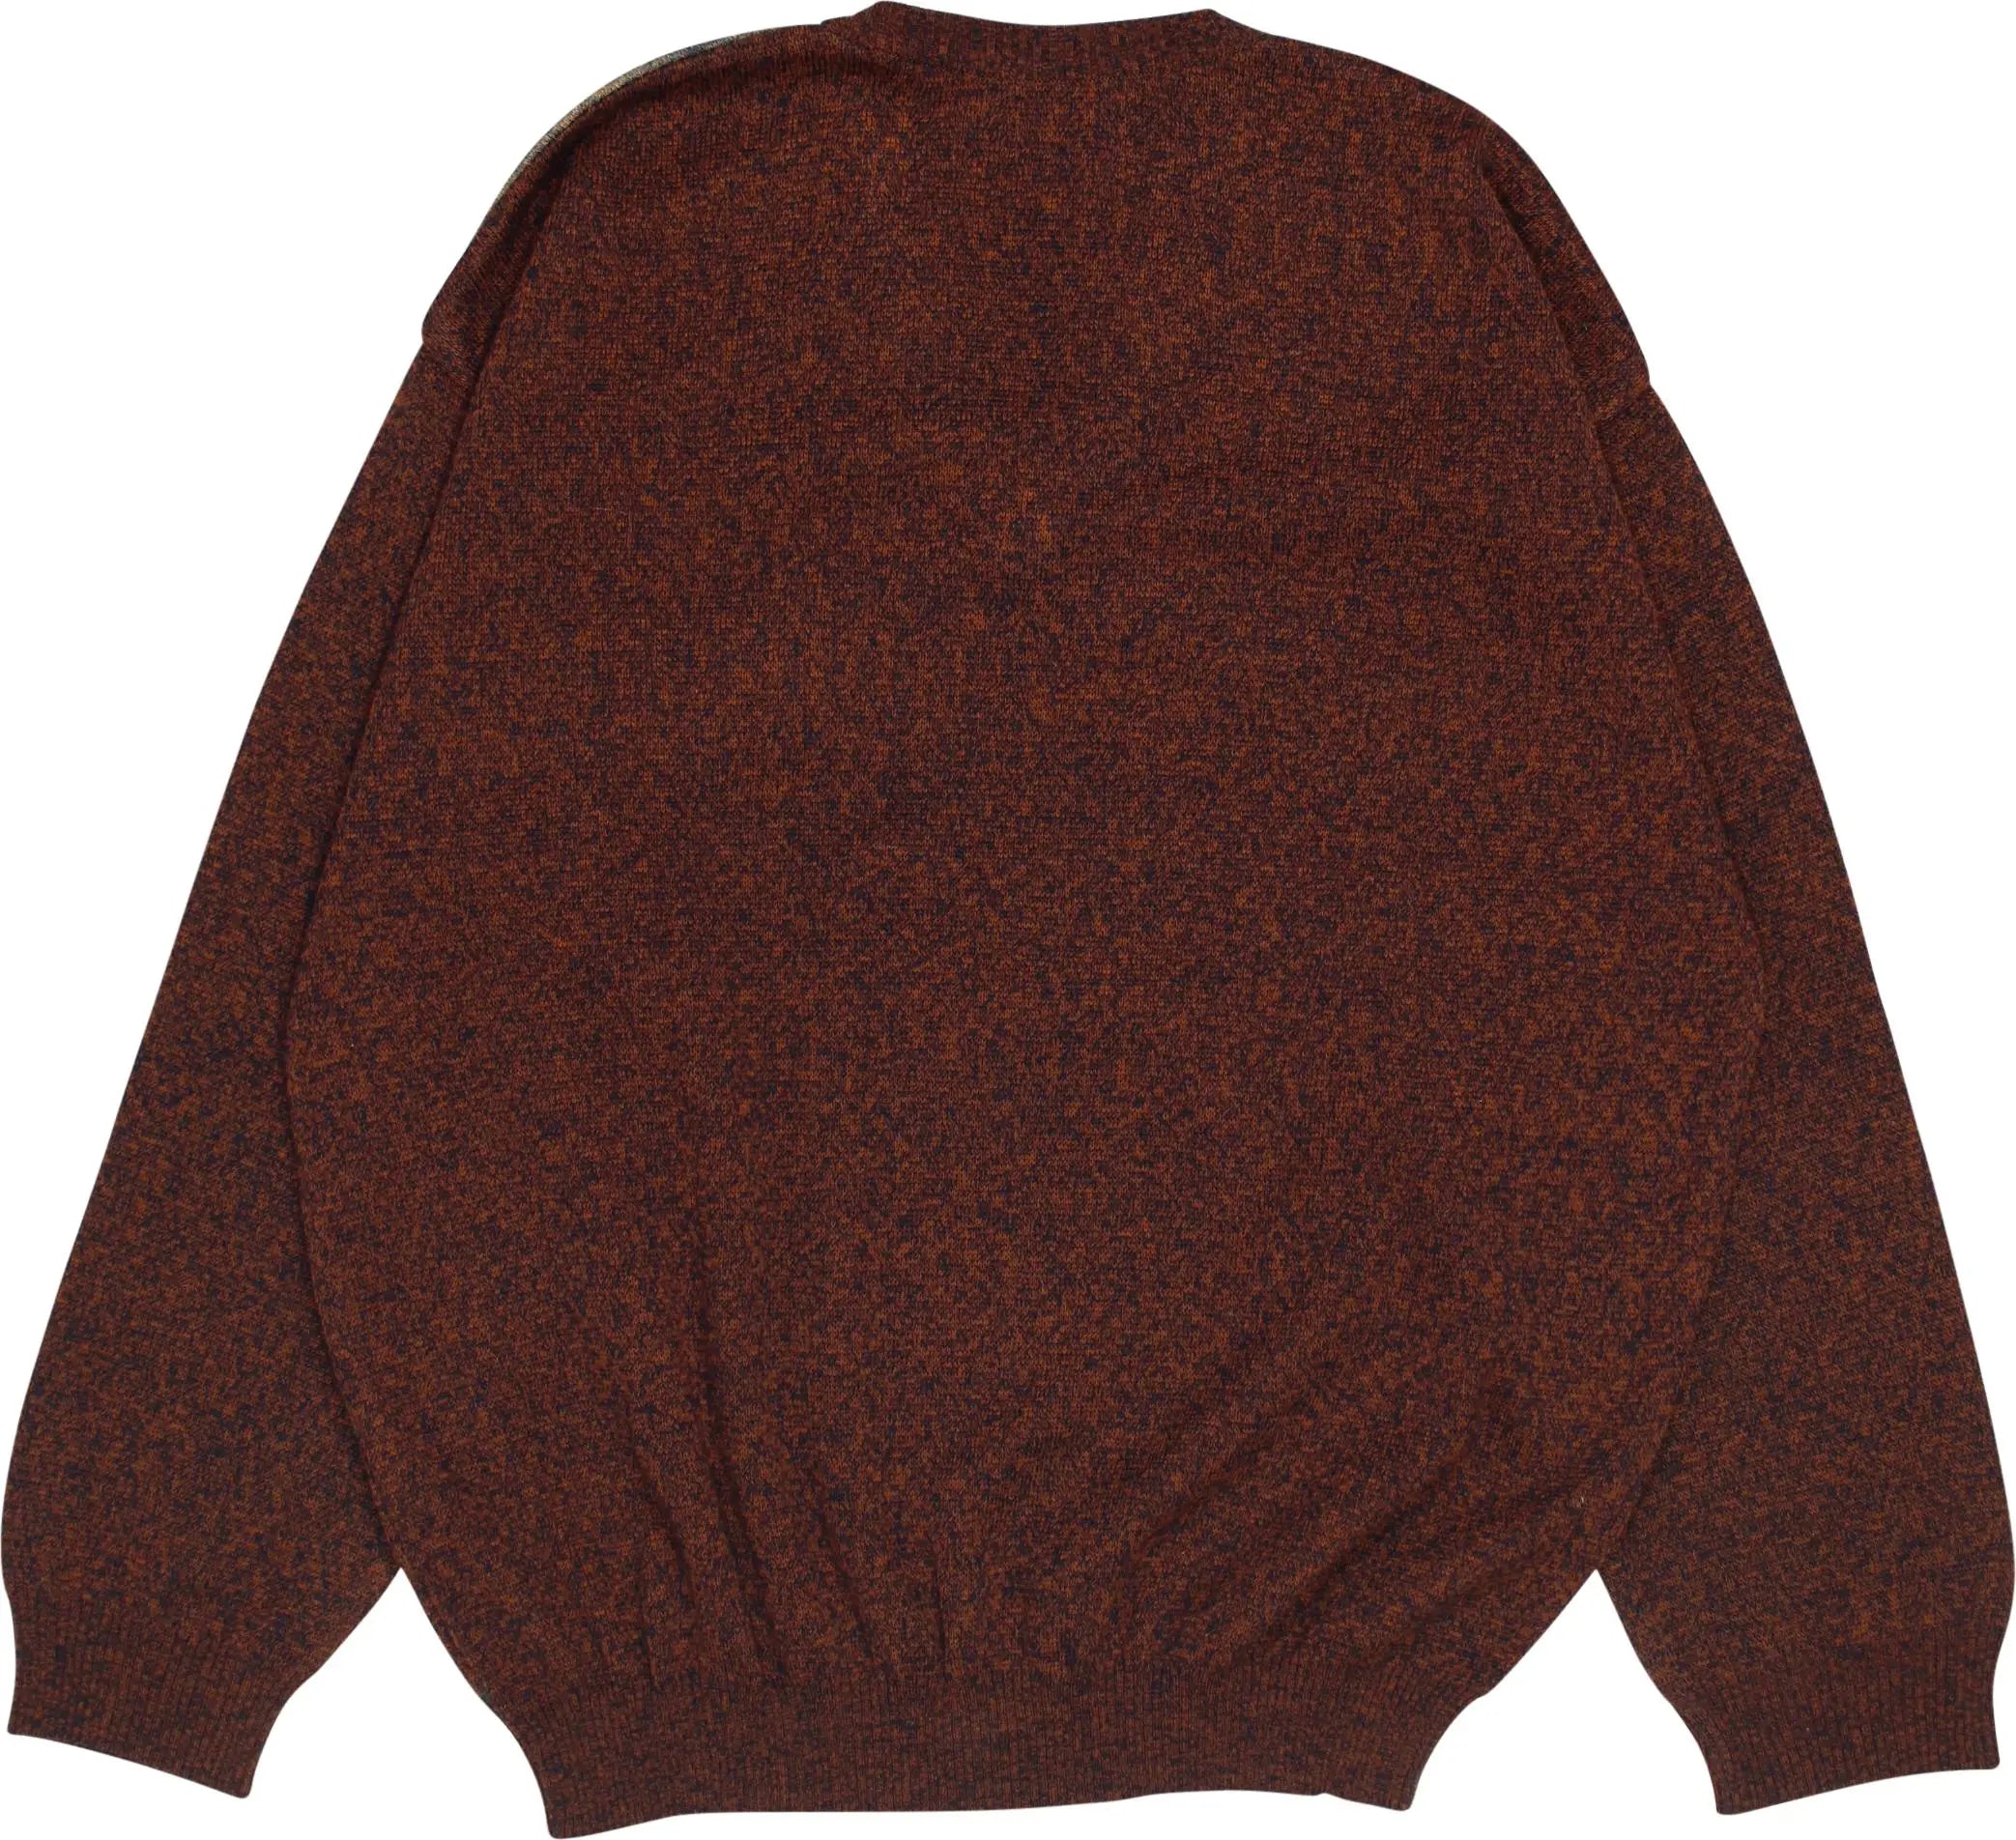 Tricots Gisbert - Wool Blend V-Neck Jumper- ThriftTale.com - Vintage and second handclothing